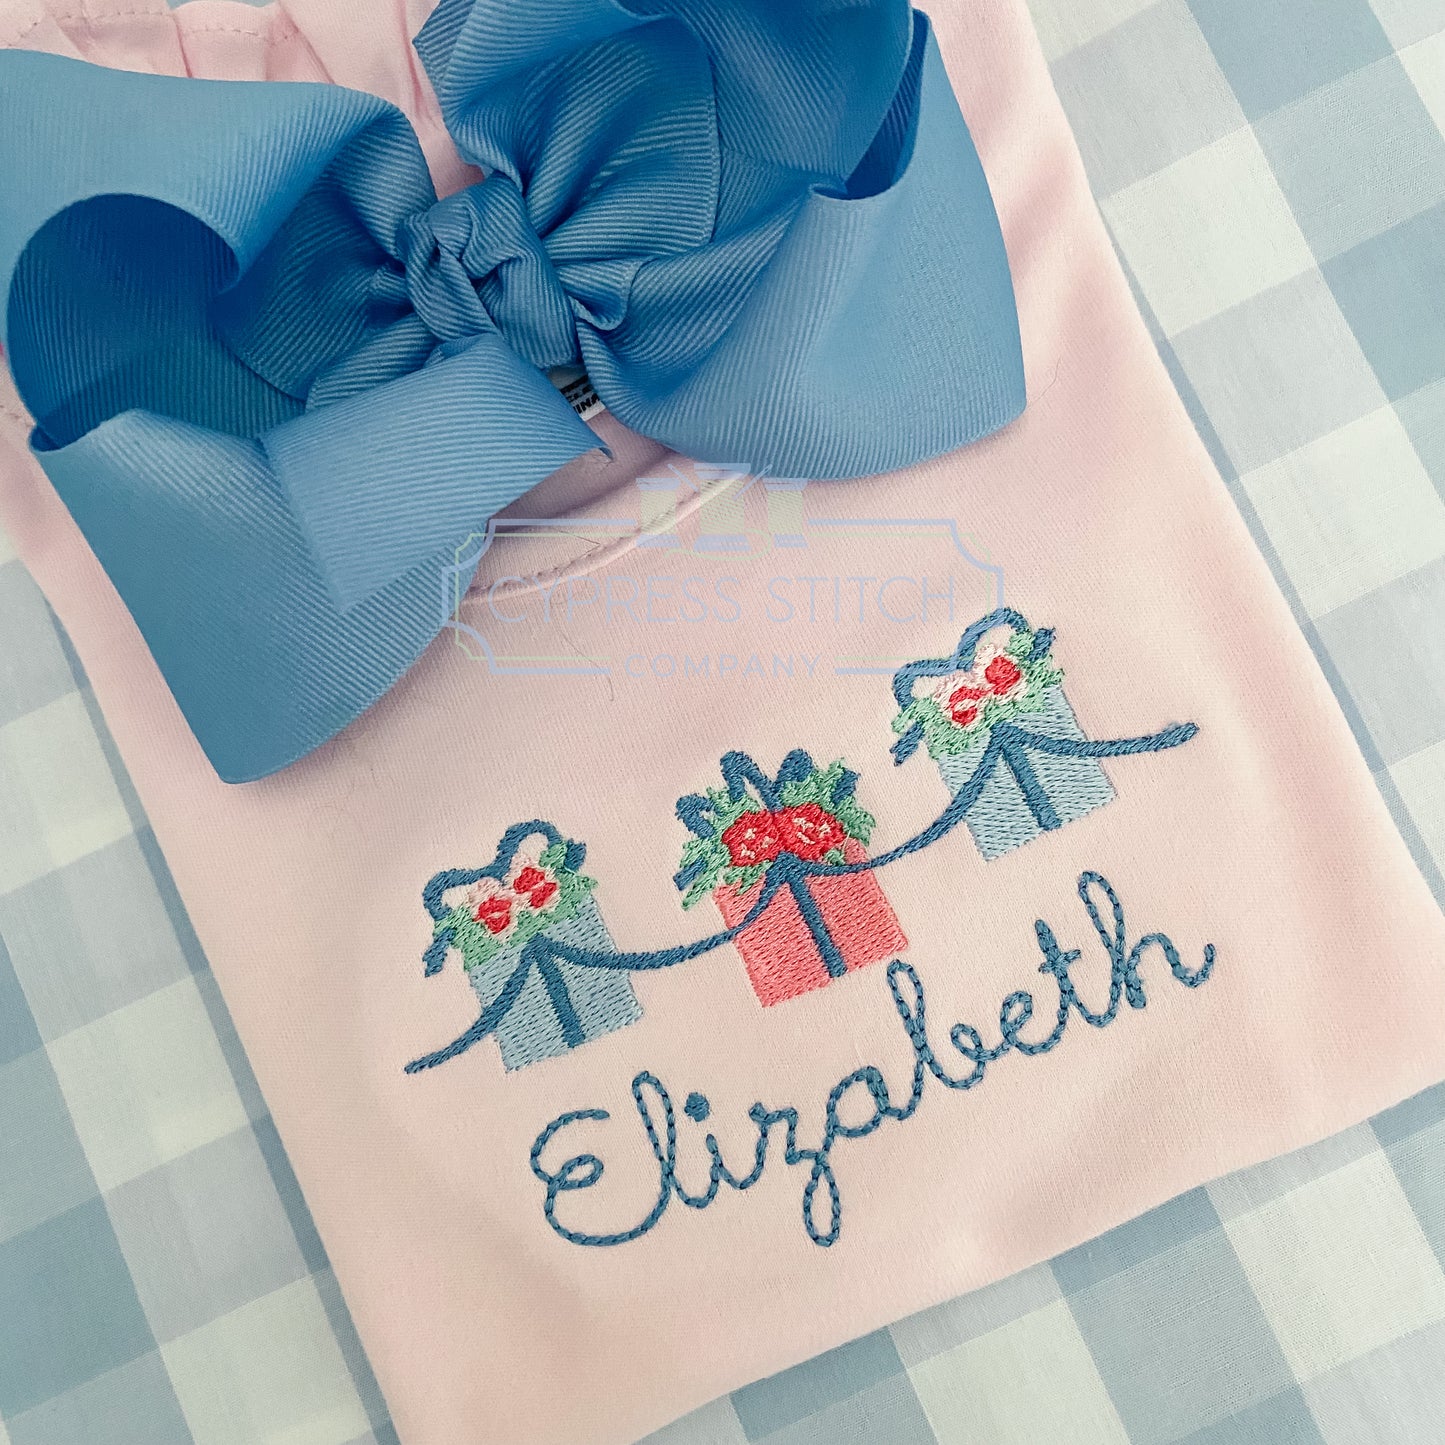 Girls TBBC Inspired Gift Birthday Shirt (EDIAG)